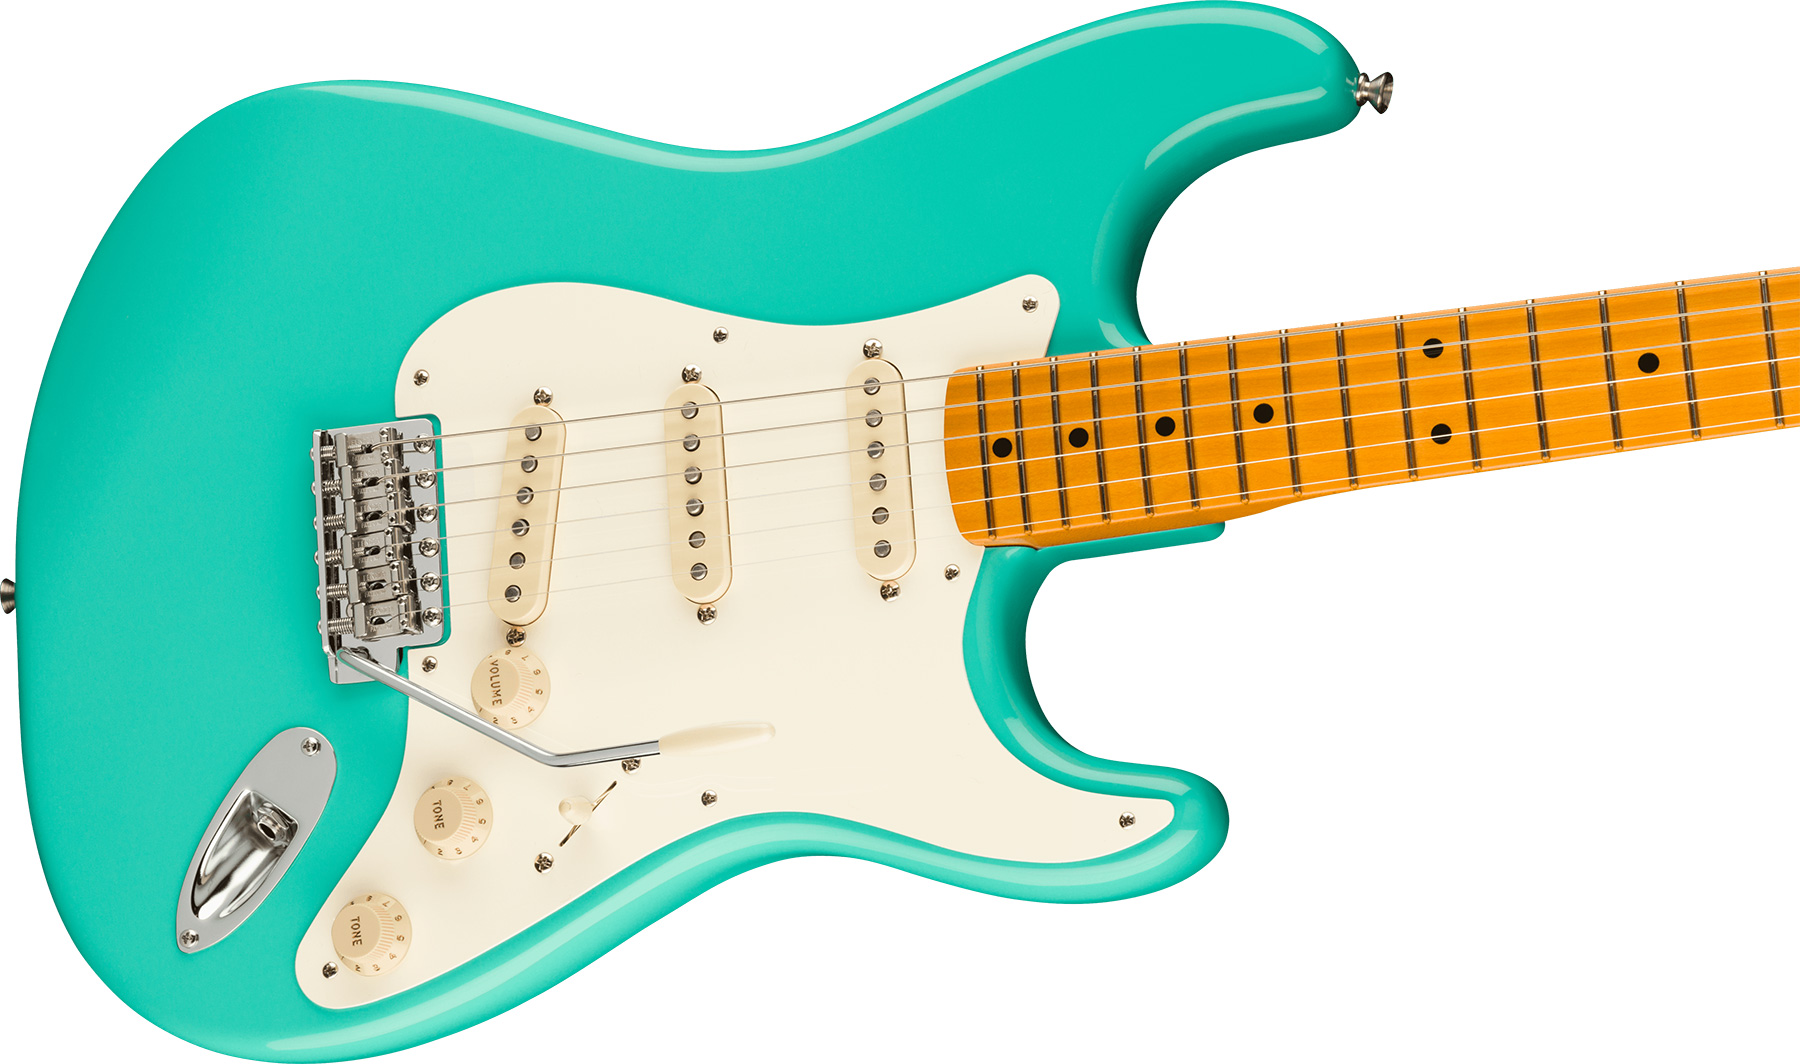 Fender Strat 1957 American Vintage Ii Usa 3s Trem Mn - Sea Foam Green - Str shape electric guitar - Variation 2